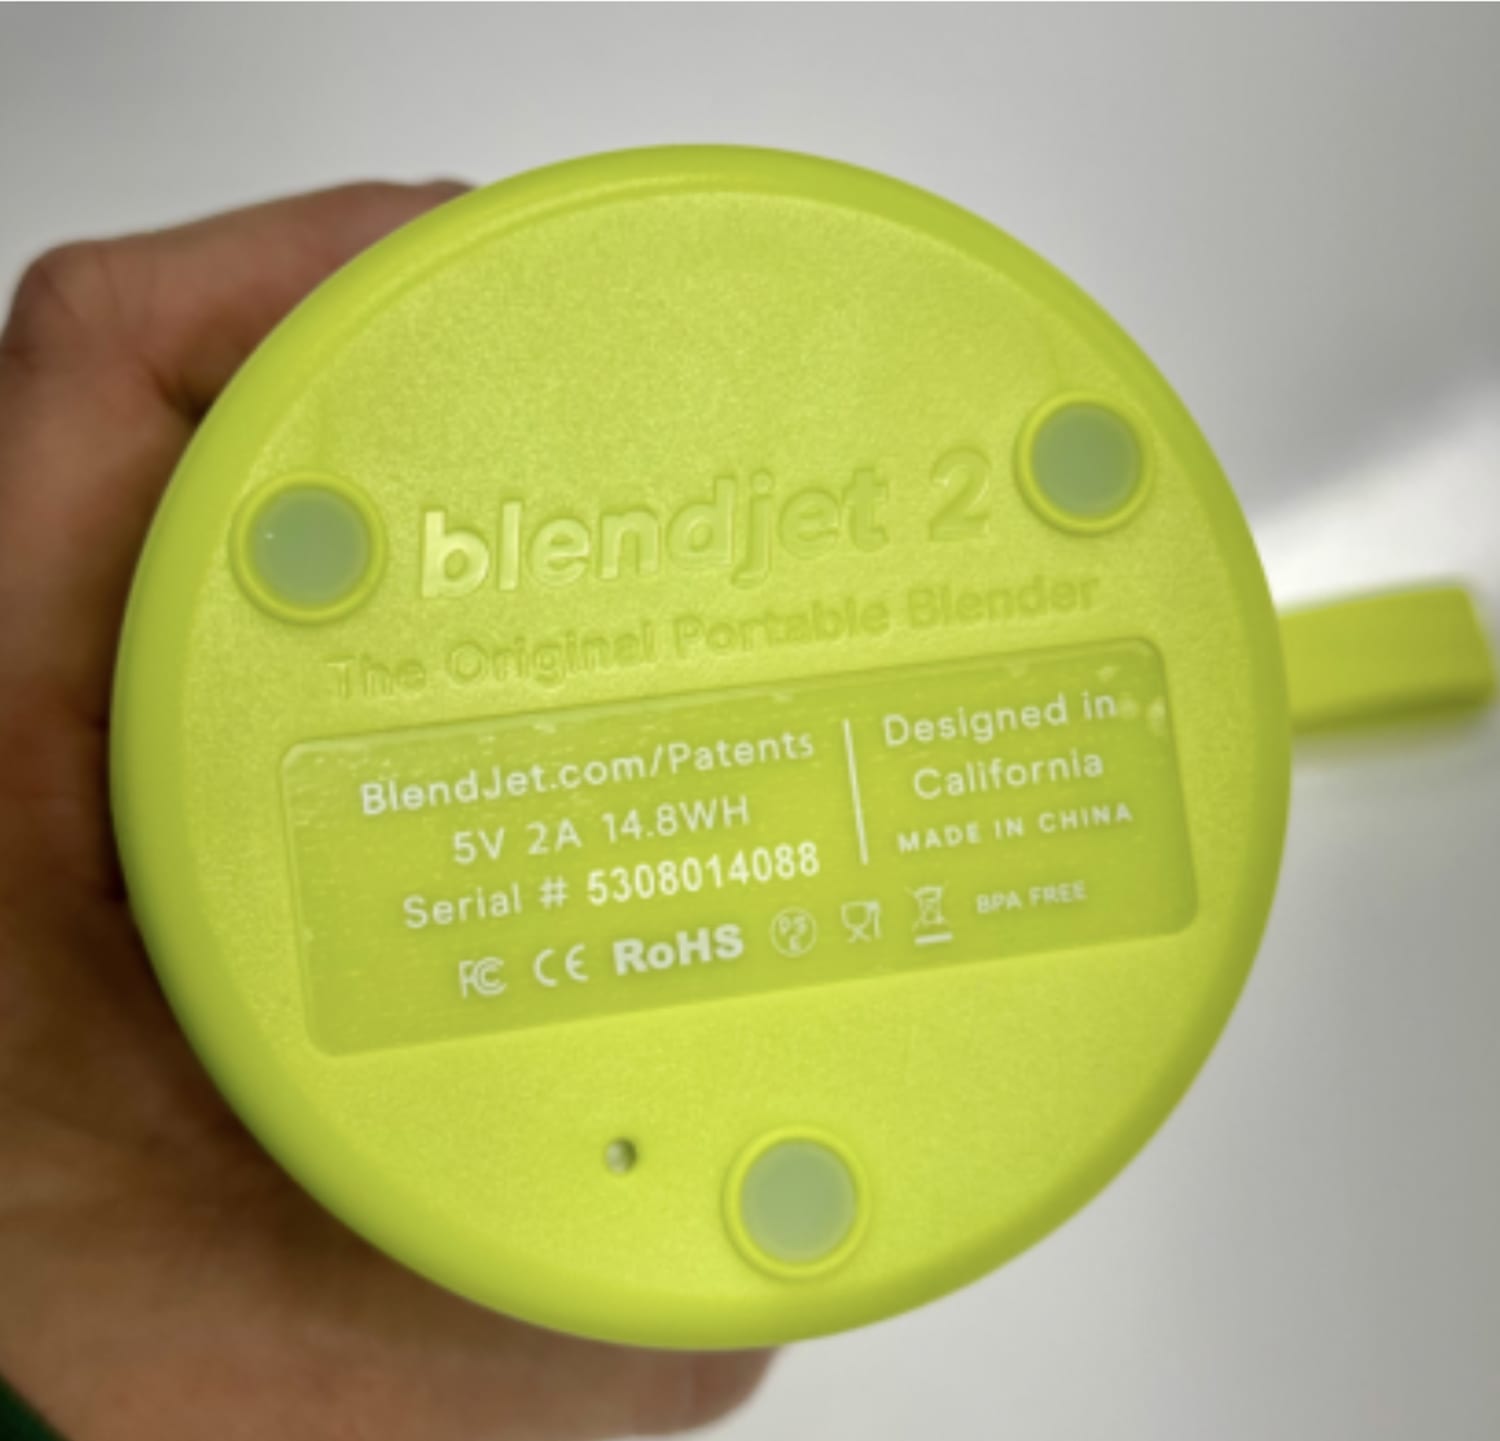 BlendJet 2 Portable Blender Review - Man Makes Fire